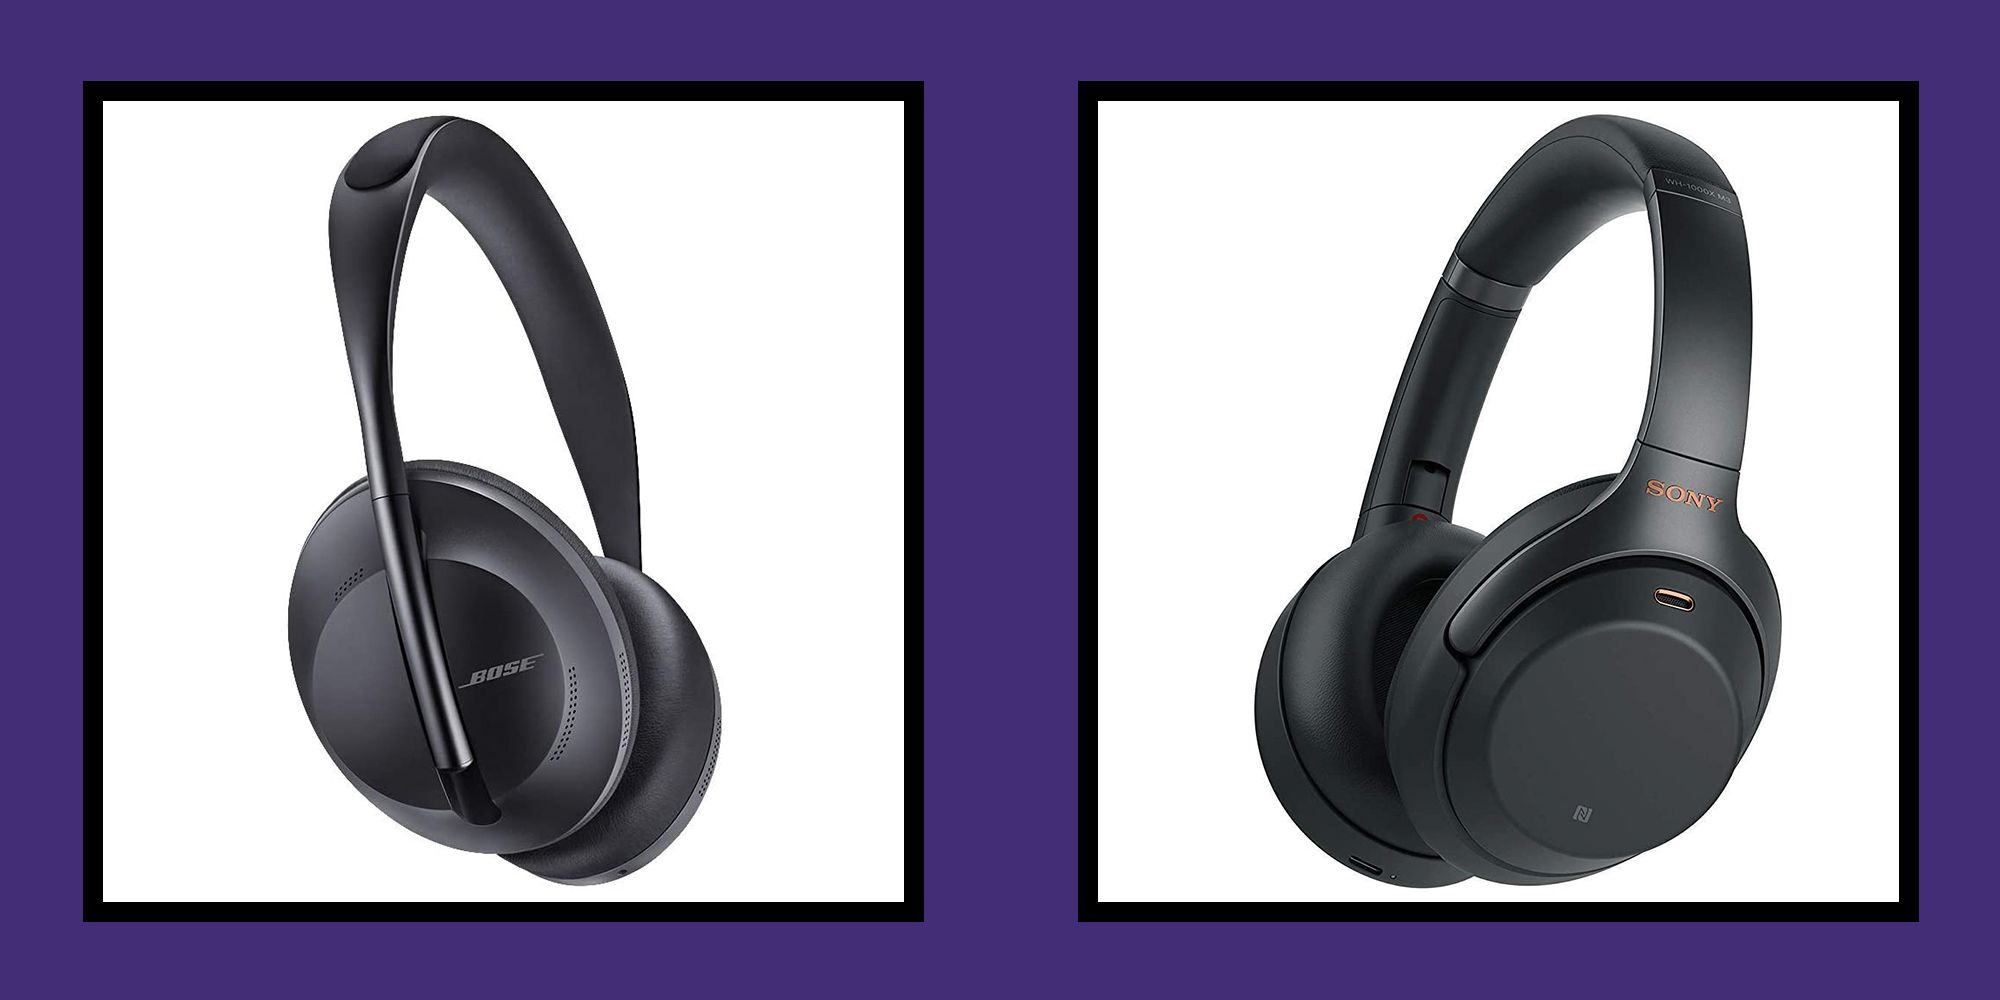 In-Ear vs. On-Ear vs. Over-Ear Headphones - Which should you buy